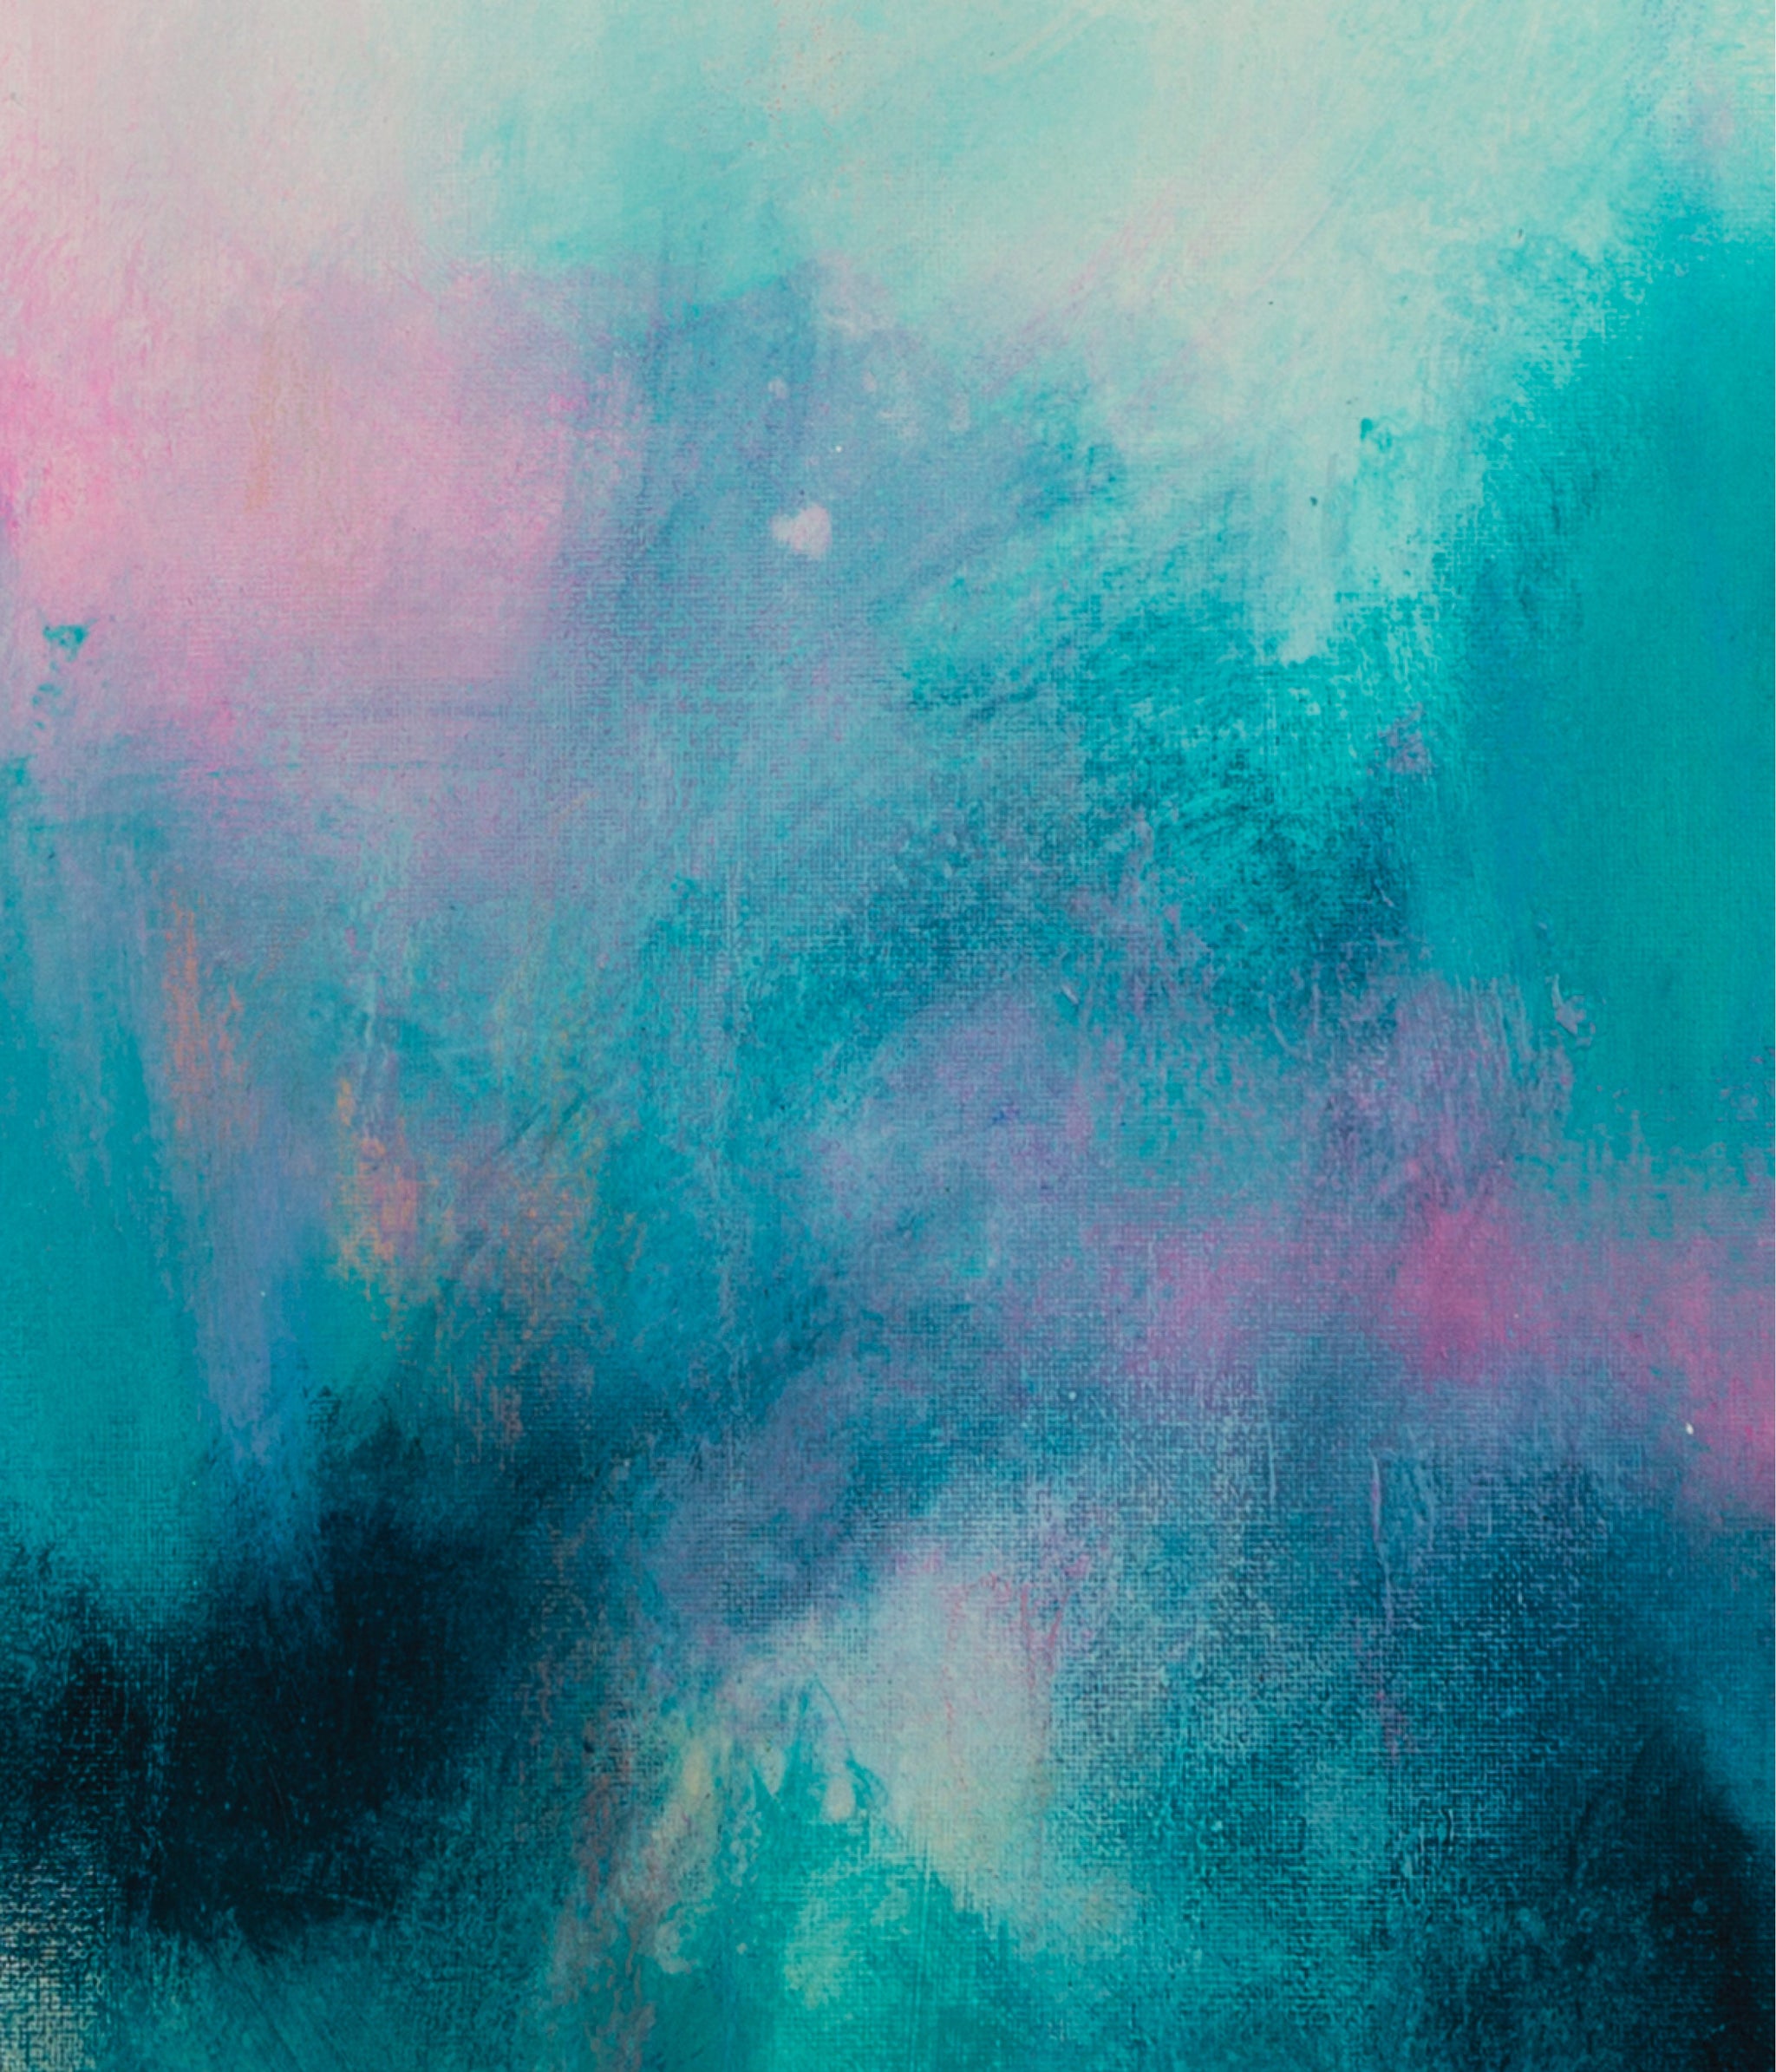 Set of 3 teal aqua blue abstract seascape art, Blush pink wall art set, Teal Abstract landscape - camilomattis.com